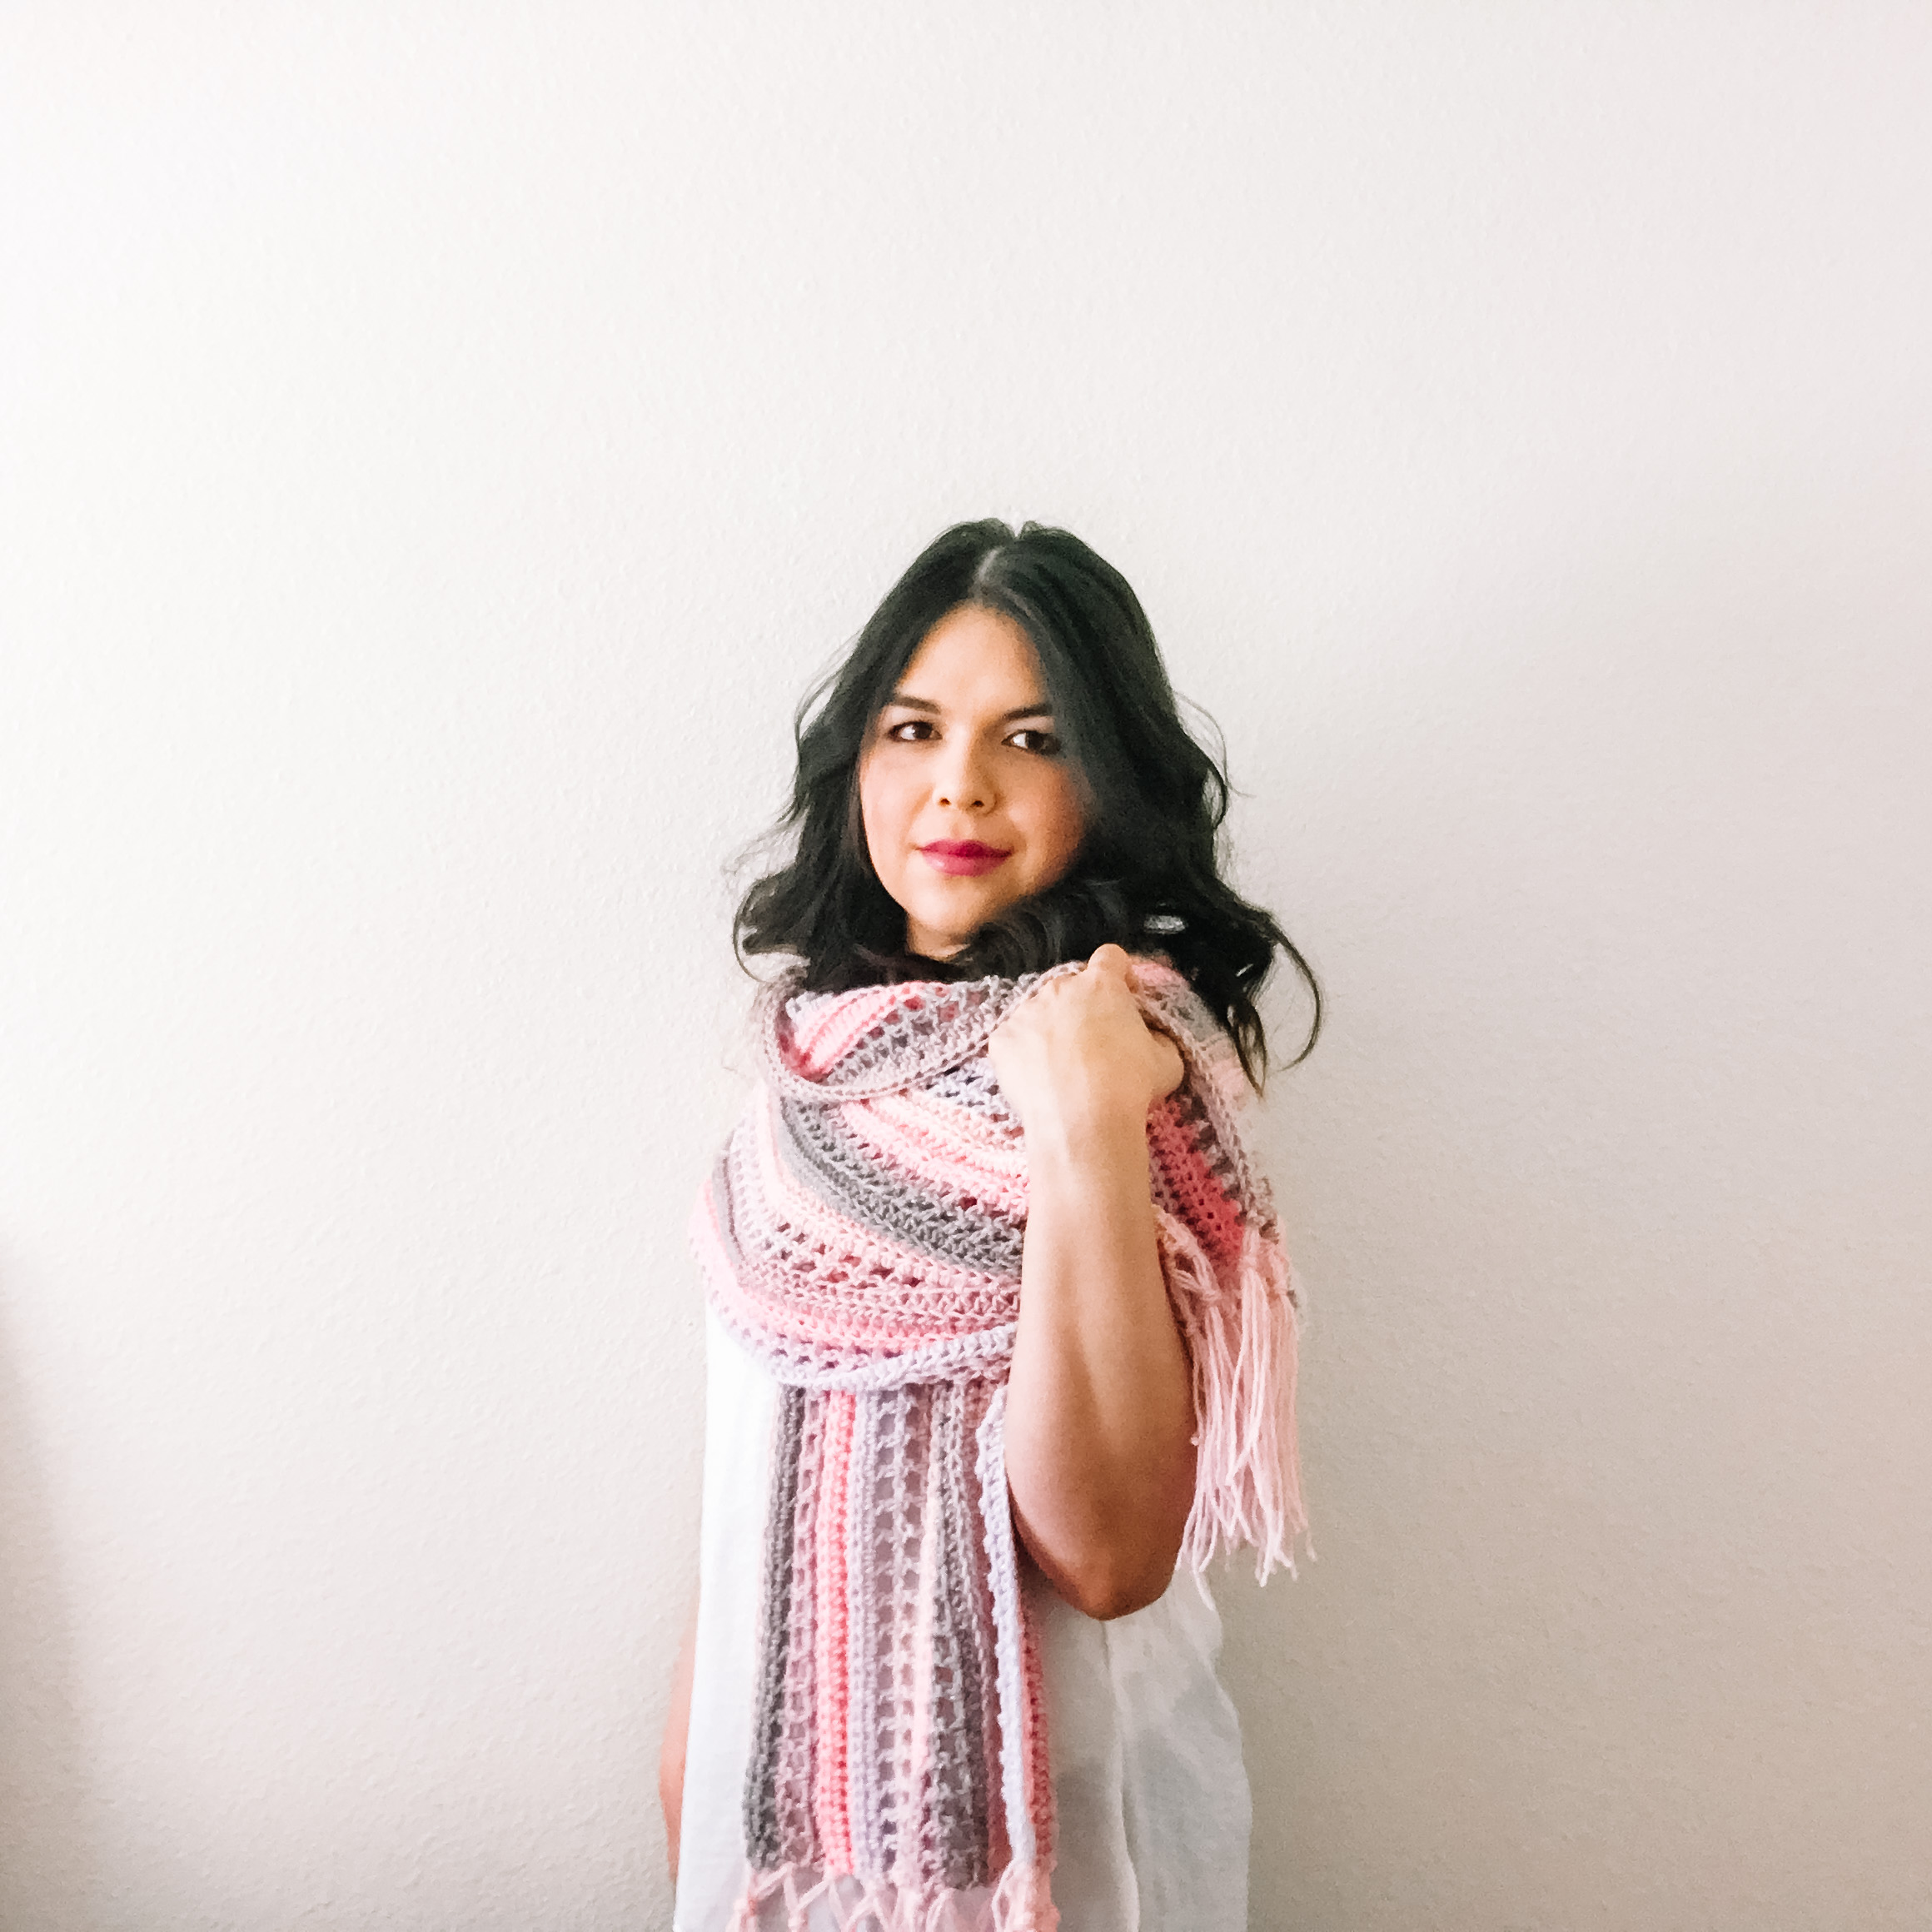 crochet shawl